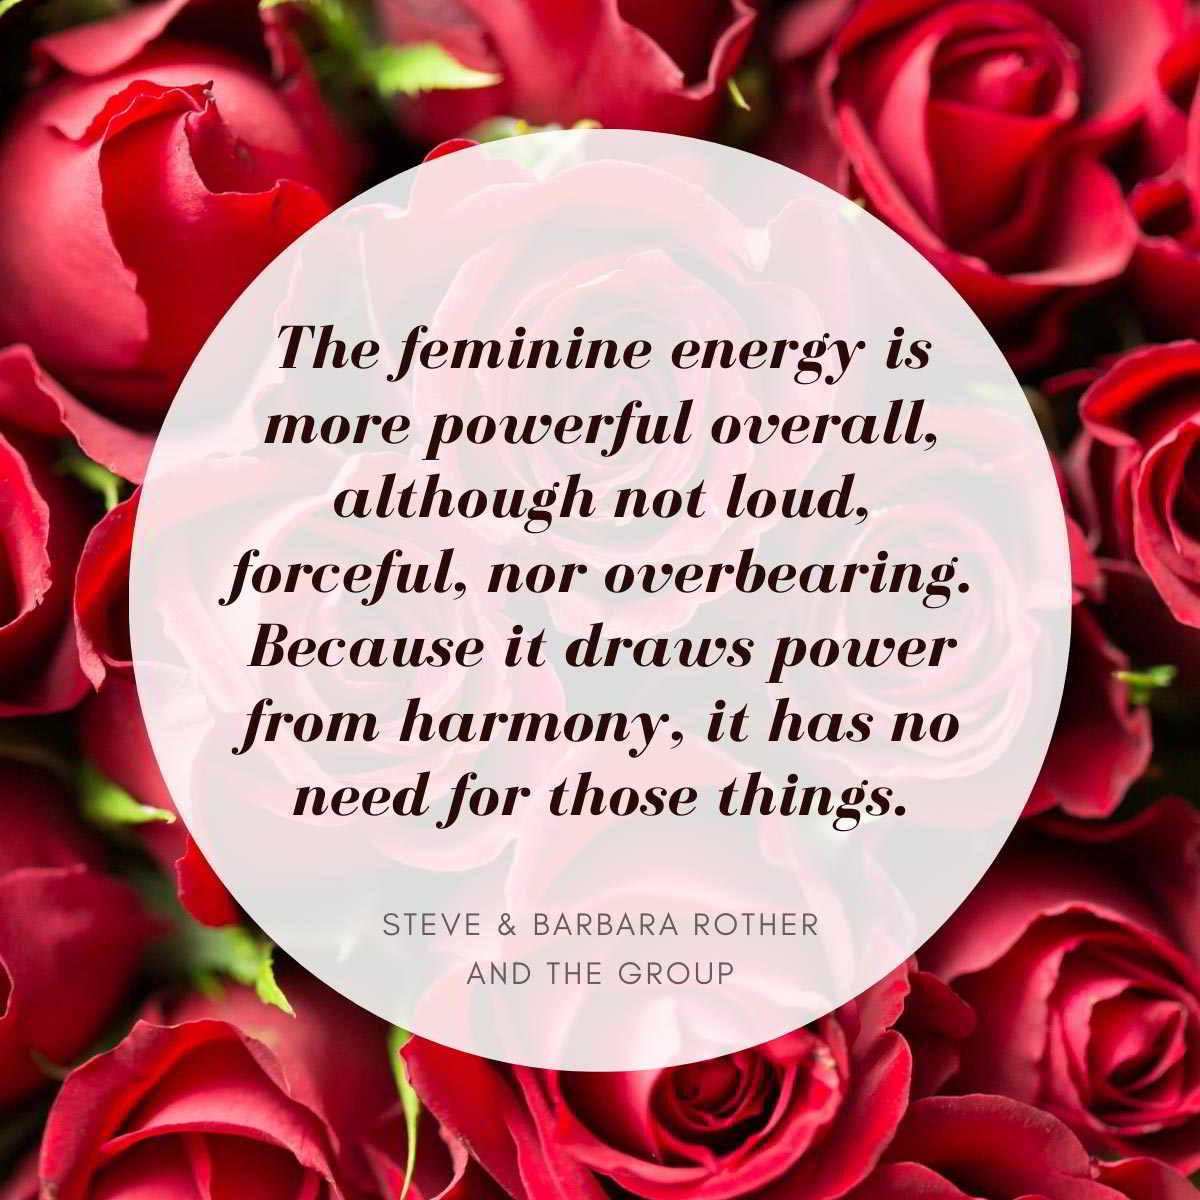 The feminine energy